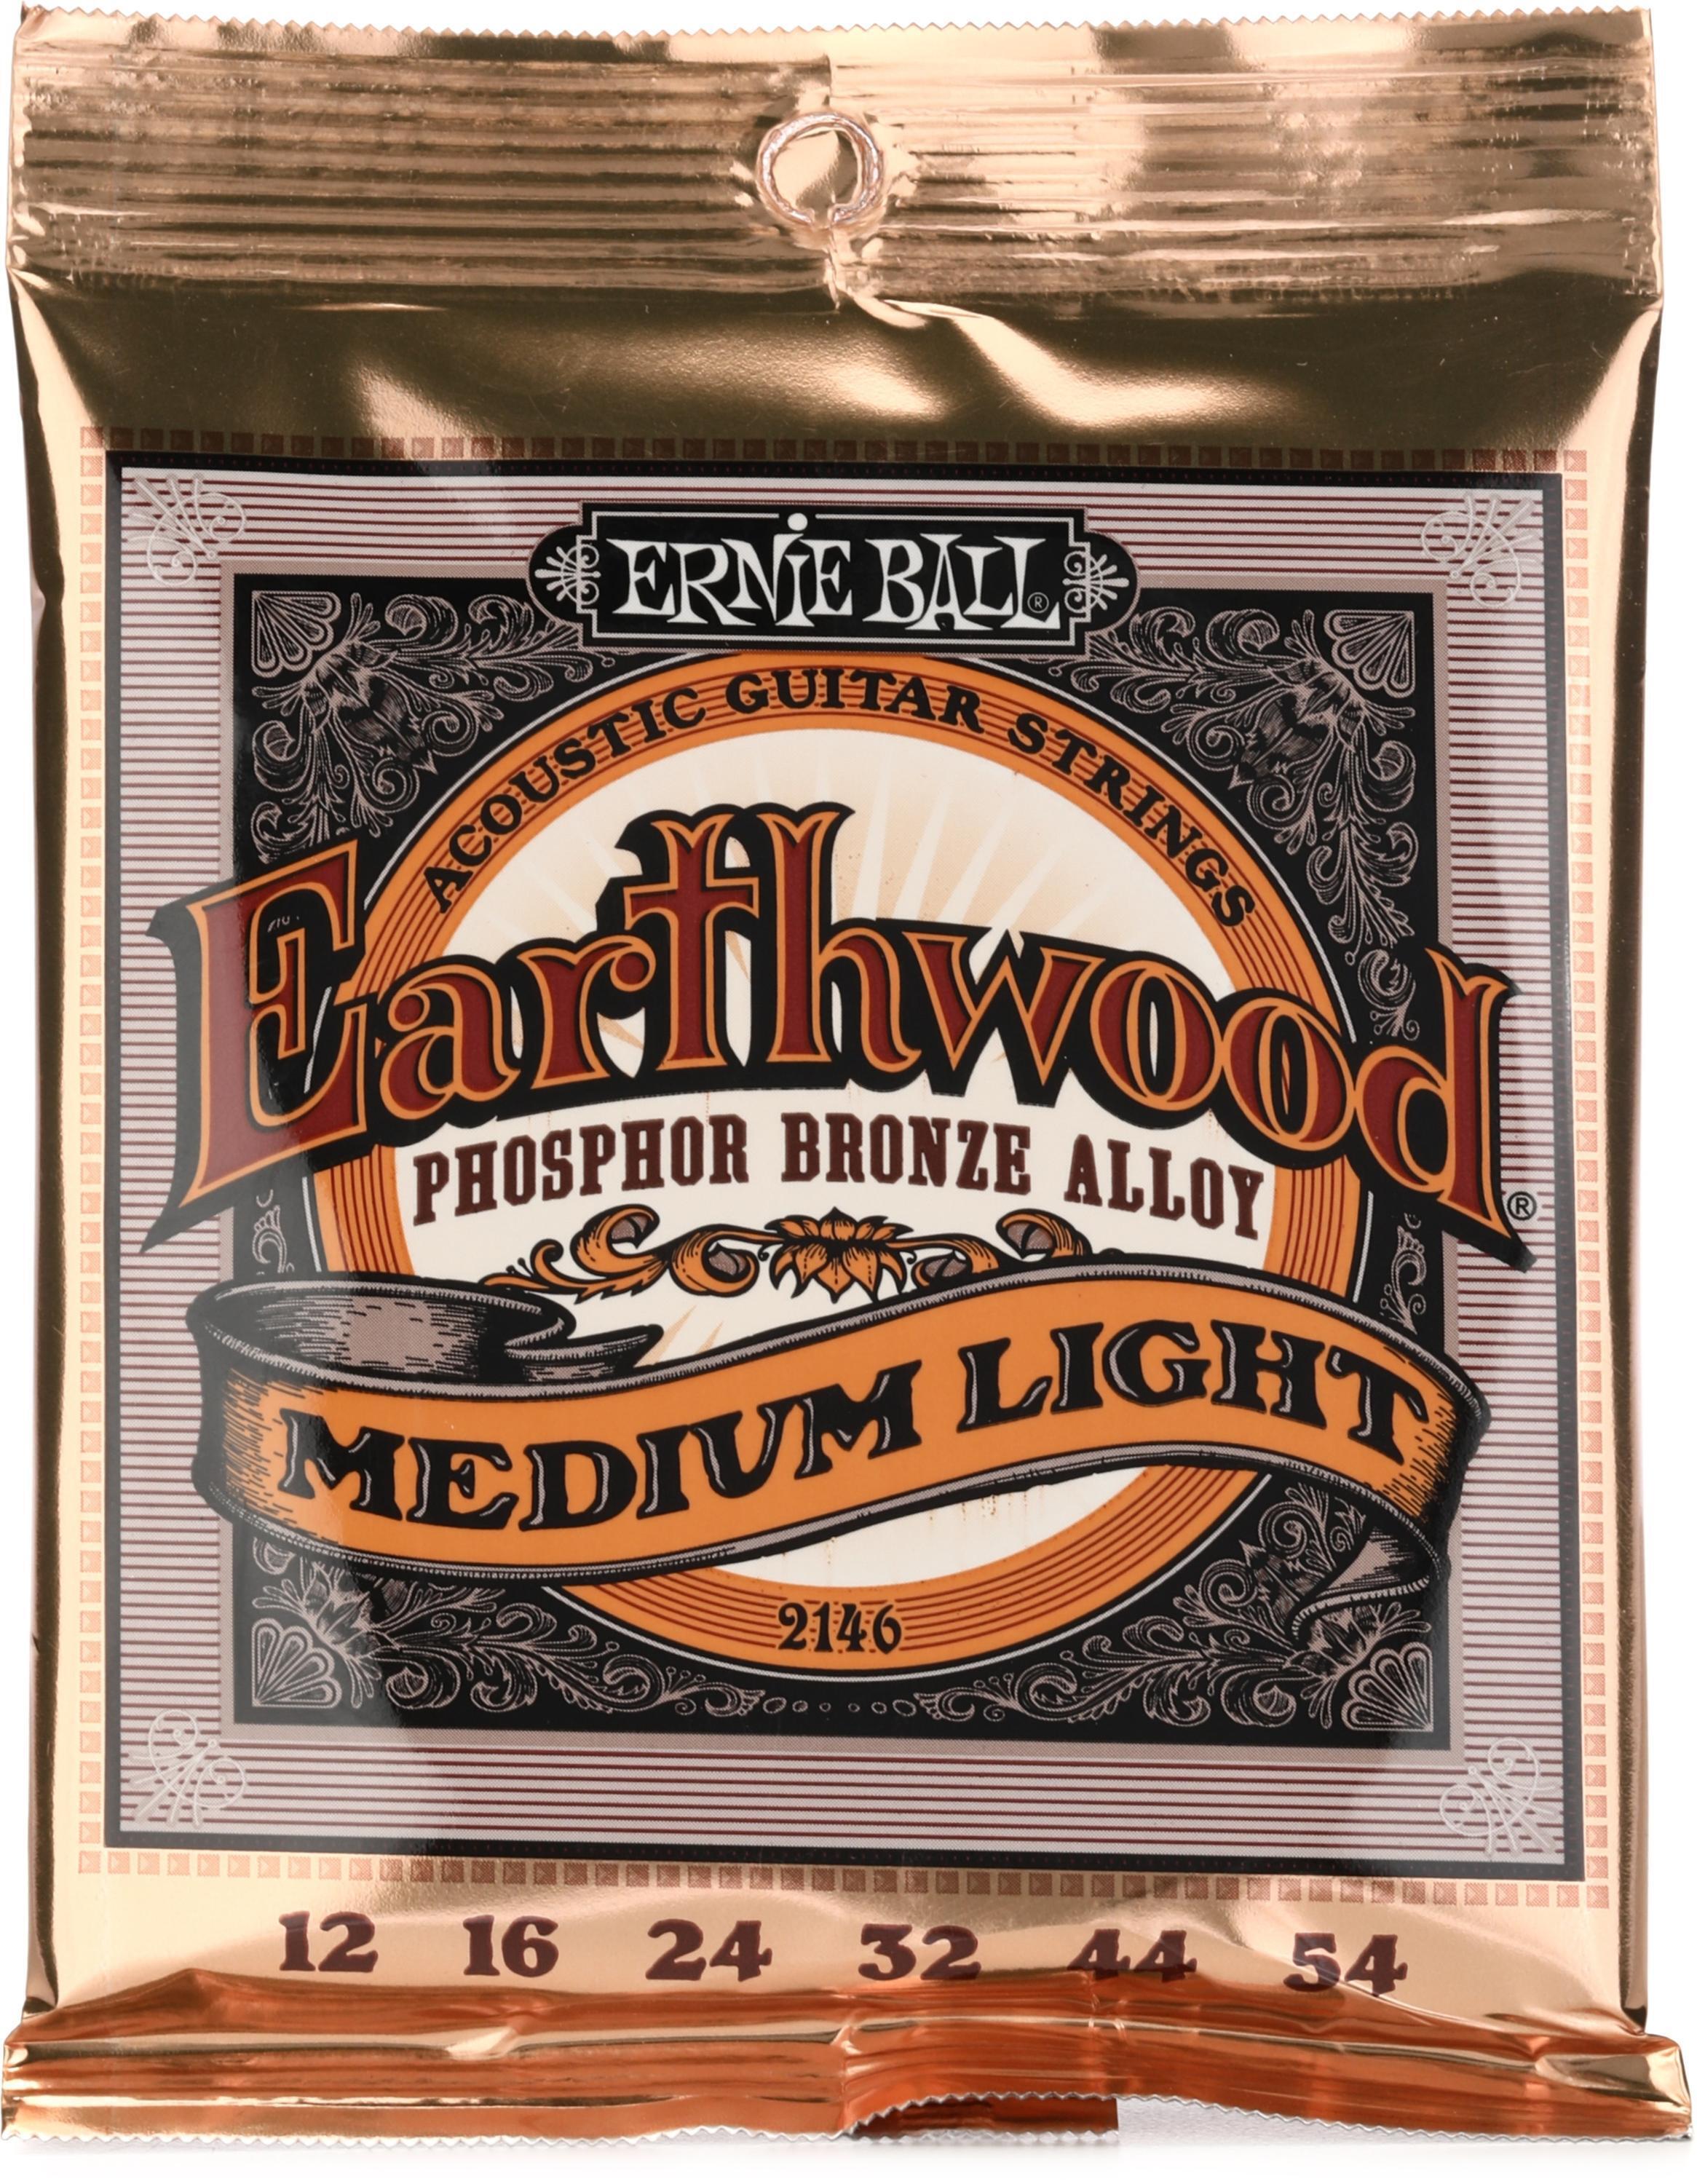 Bundled Item: Ernie Ball 2146 Earthwood Phosphor Bronze Acoustic Guitar Strings - .012-.054 Medium Light